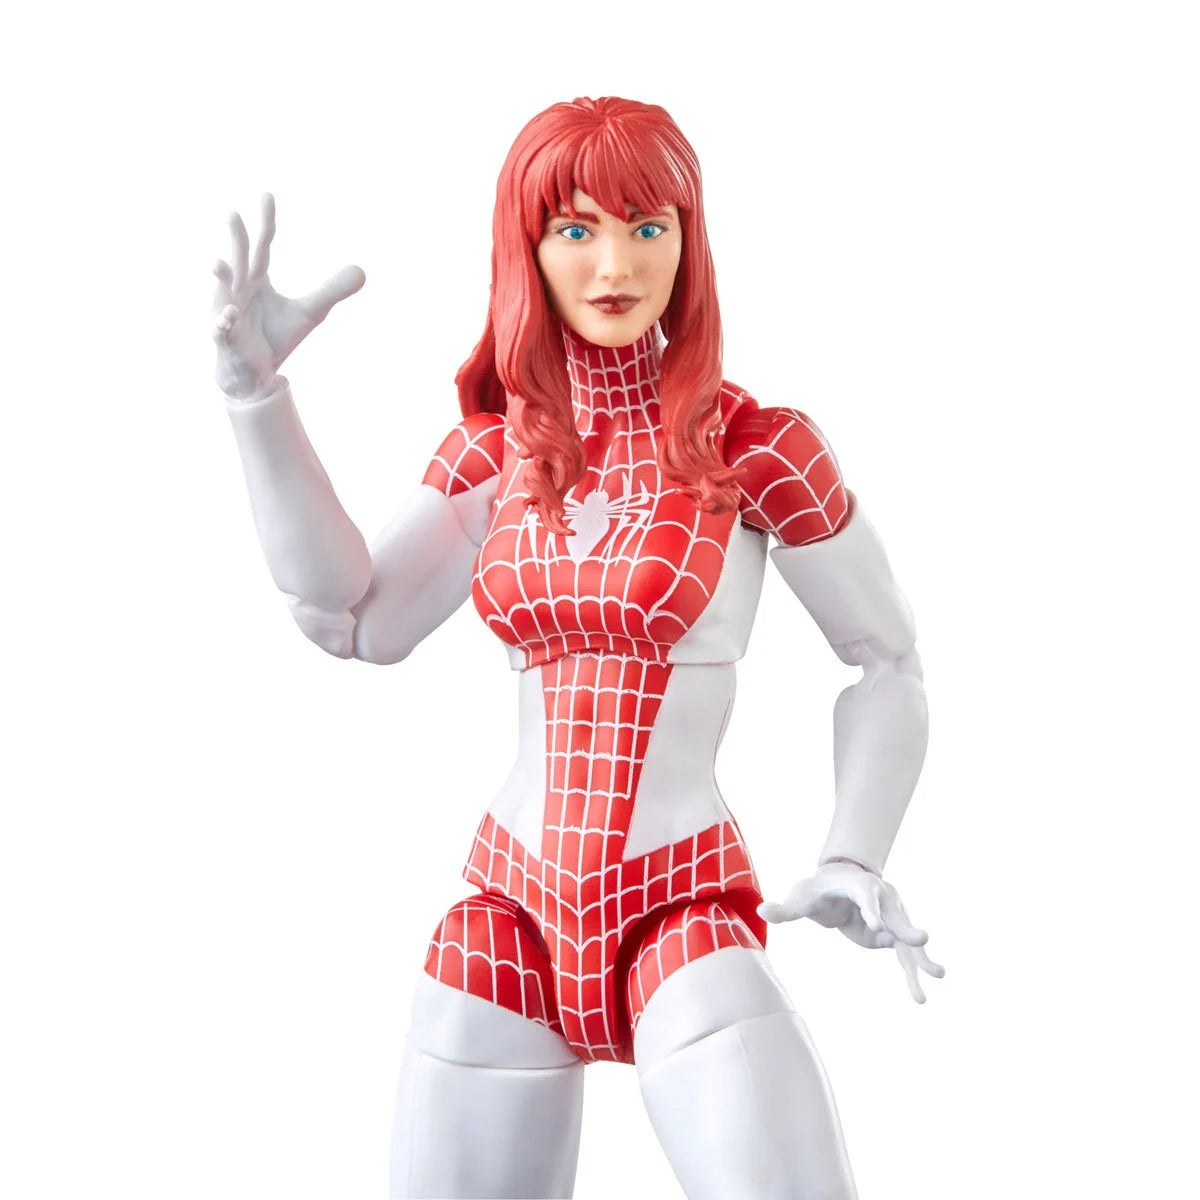 Marvel legends Pack Spider Man and Spinneret 6 Inch Action Figure